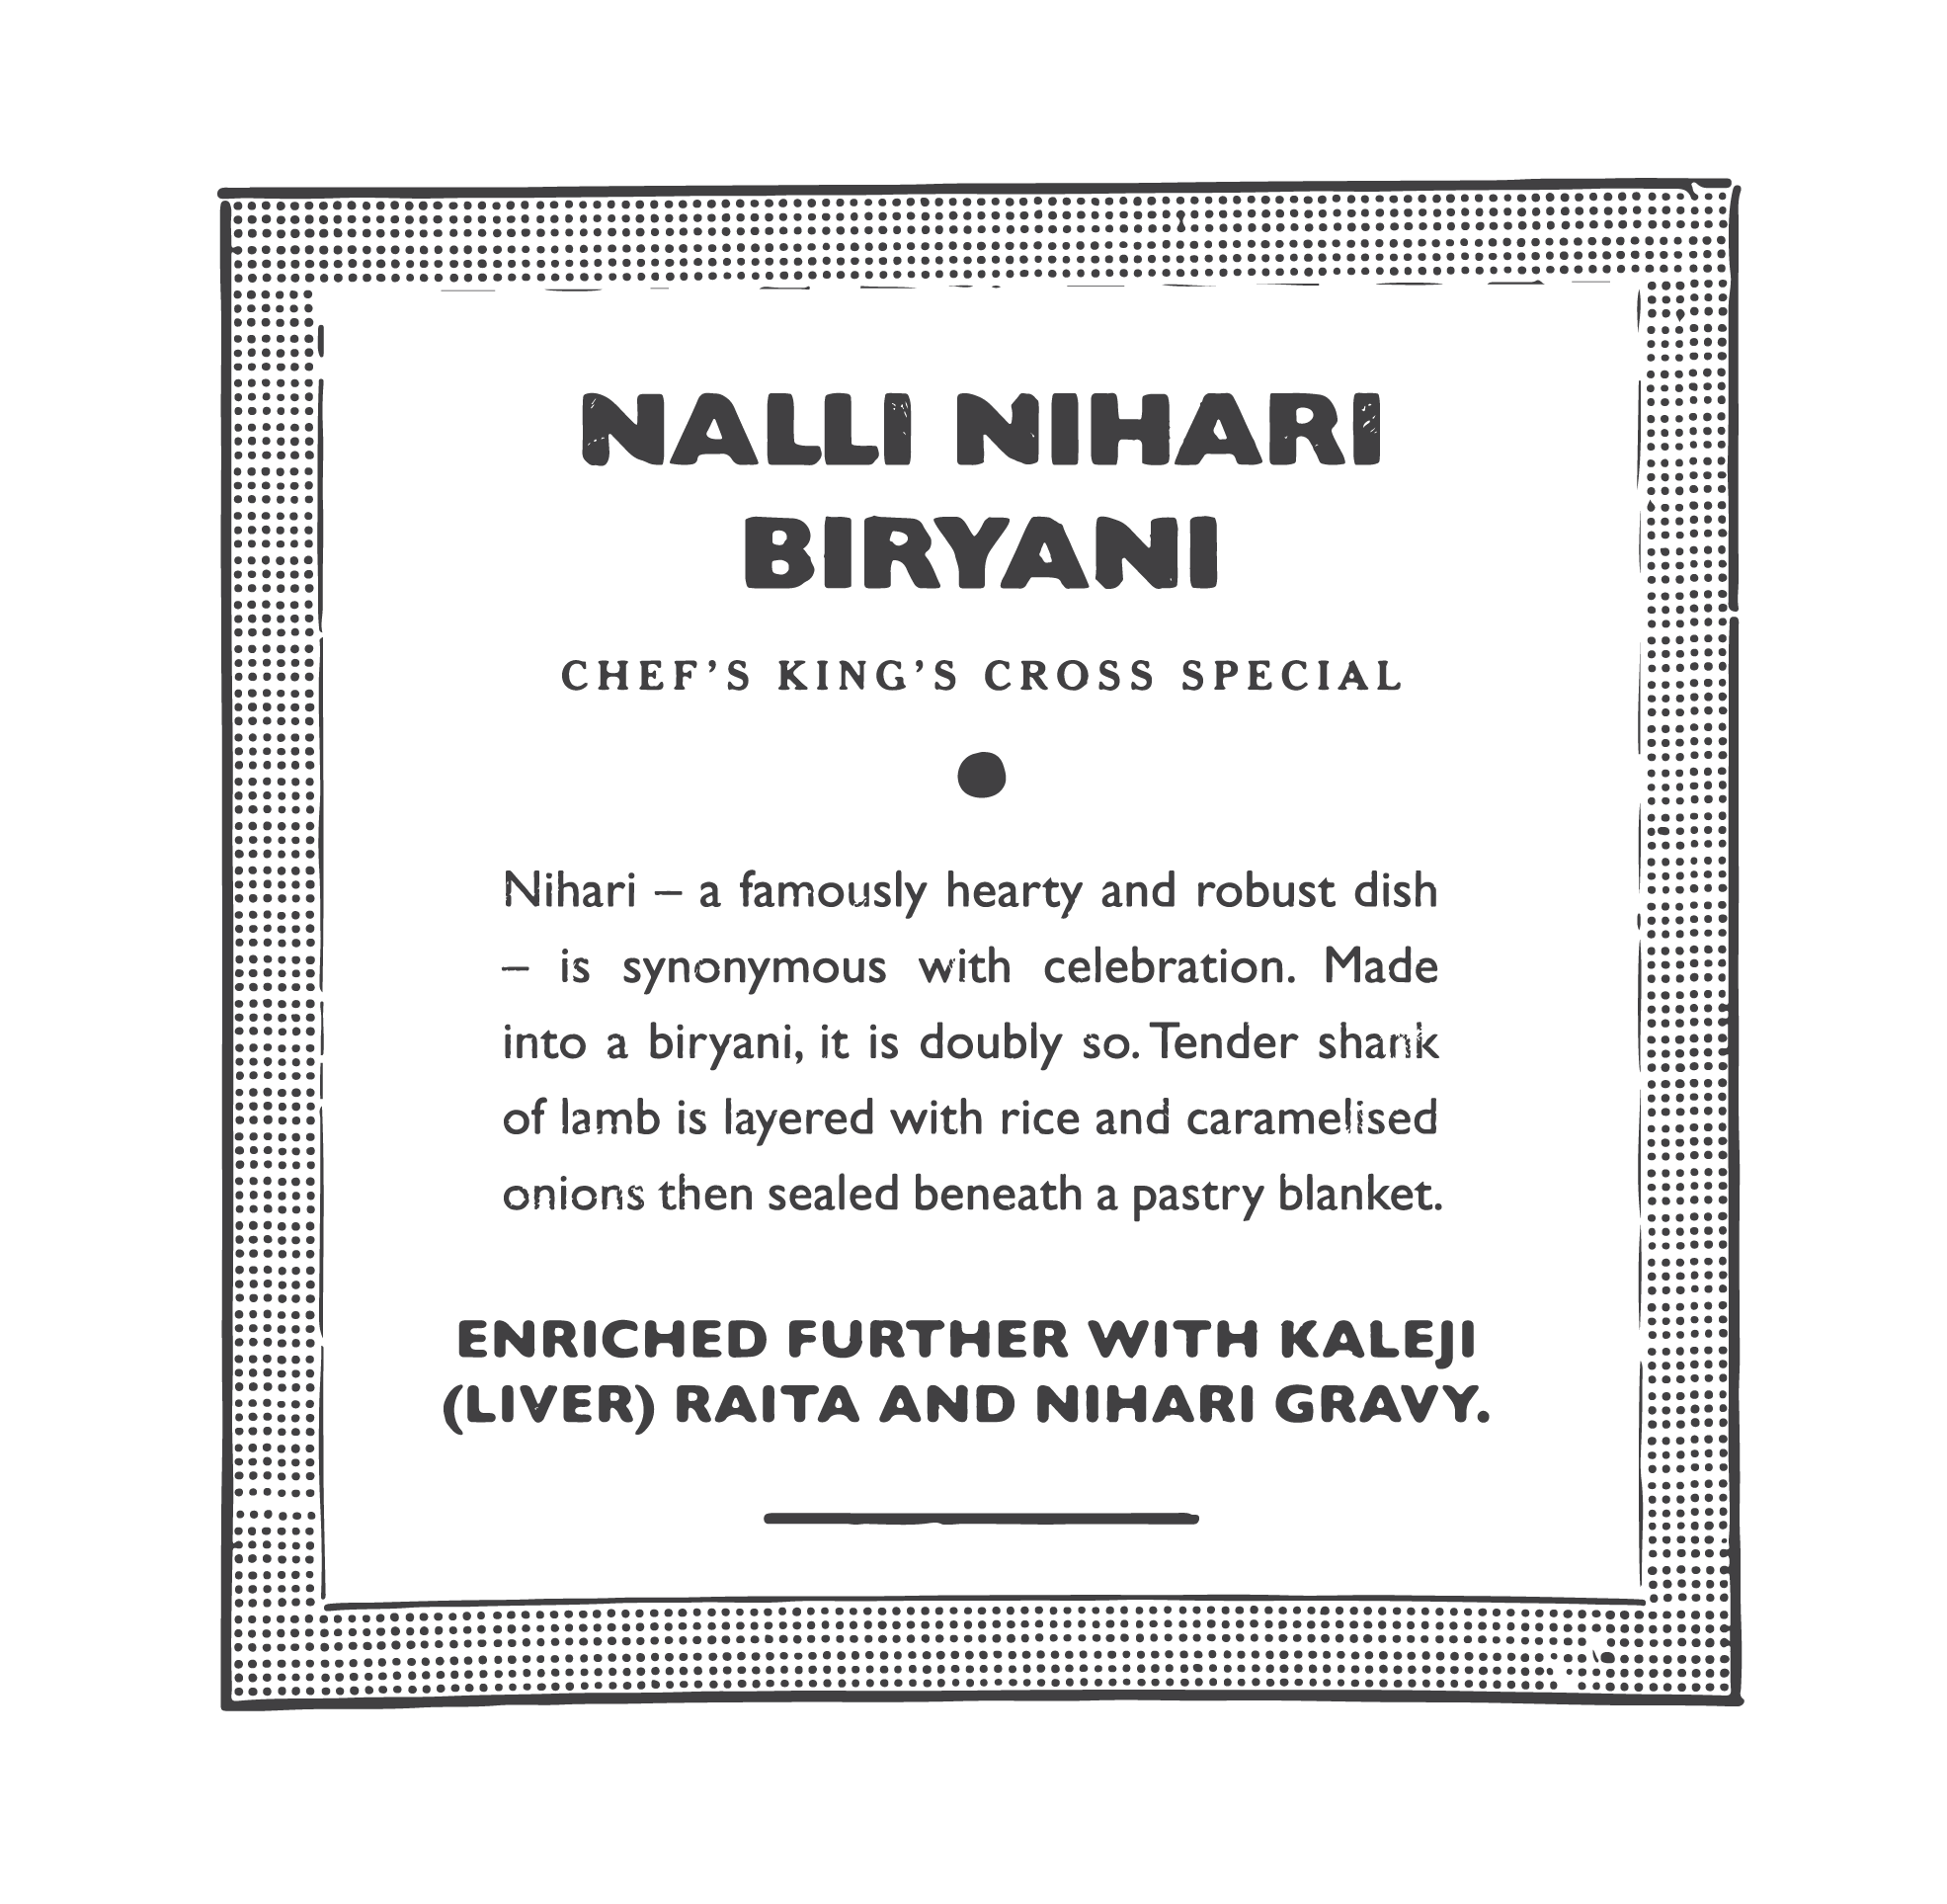 Dishoom King's Cross Special - Nalli Nihari Biryani